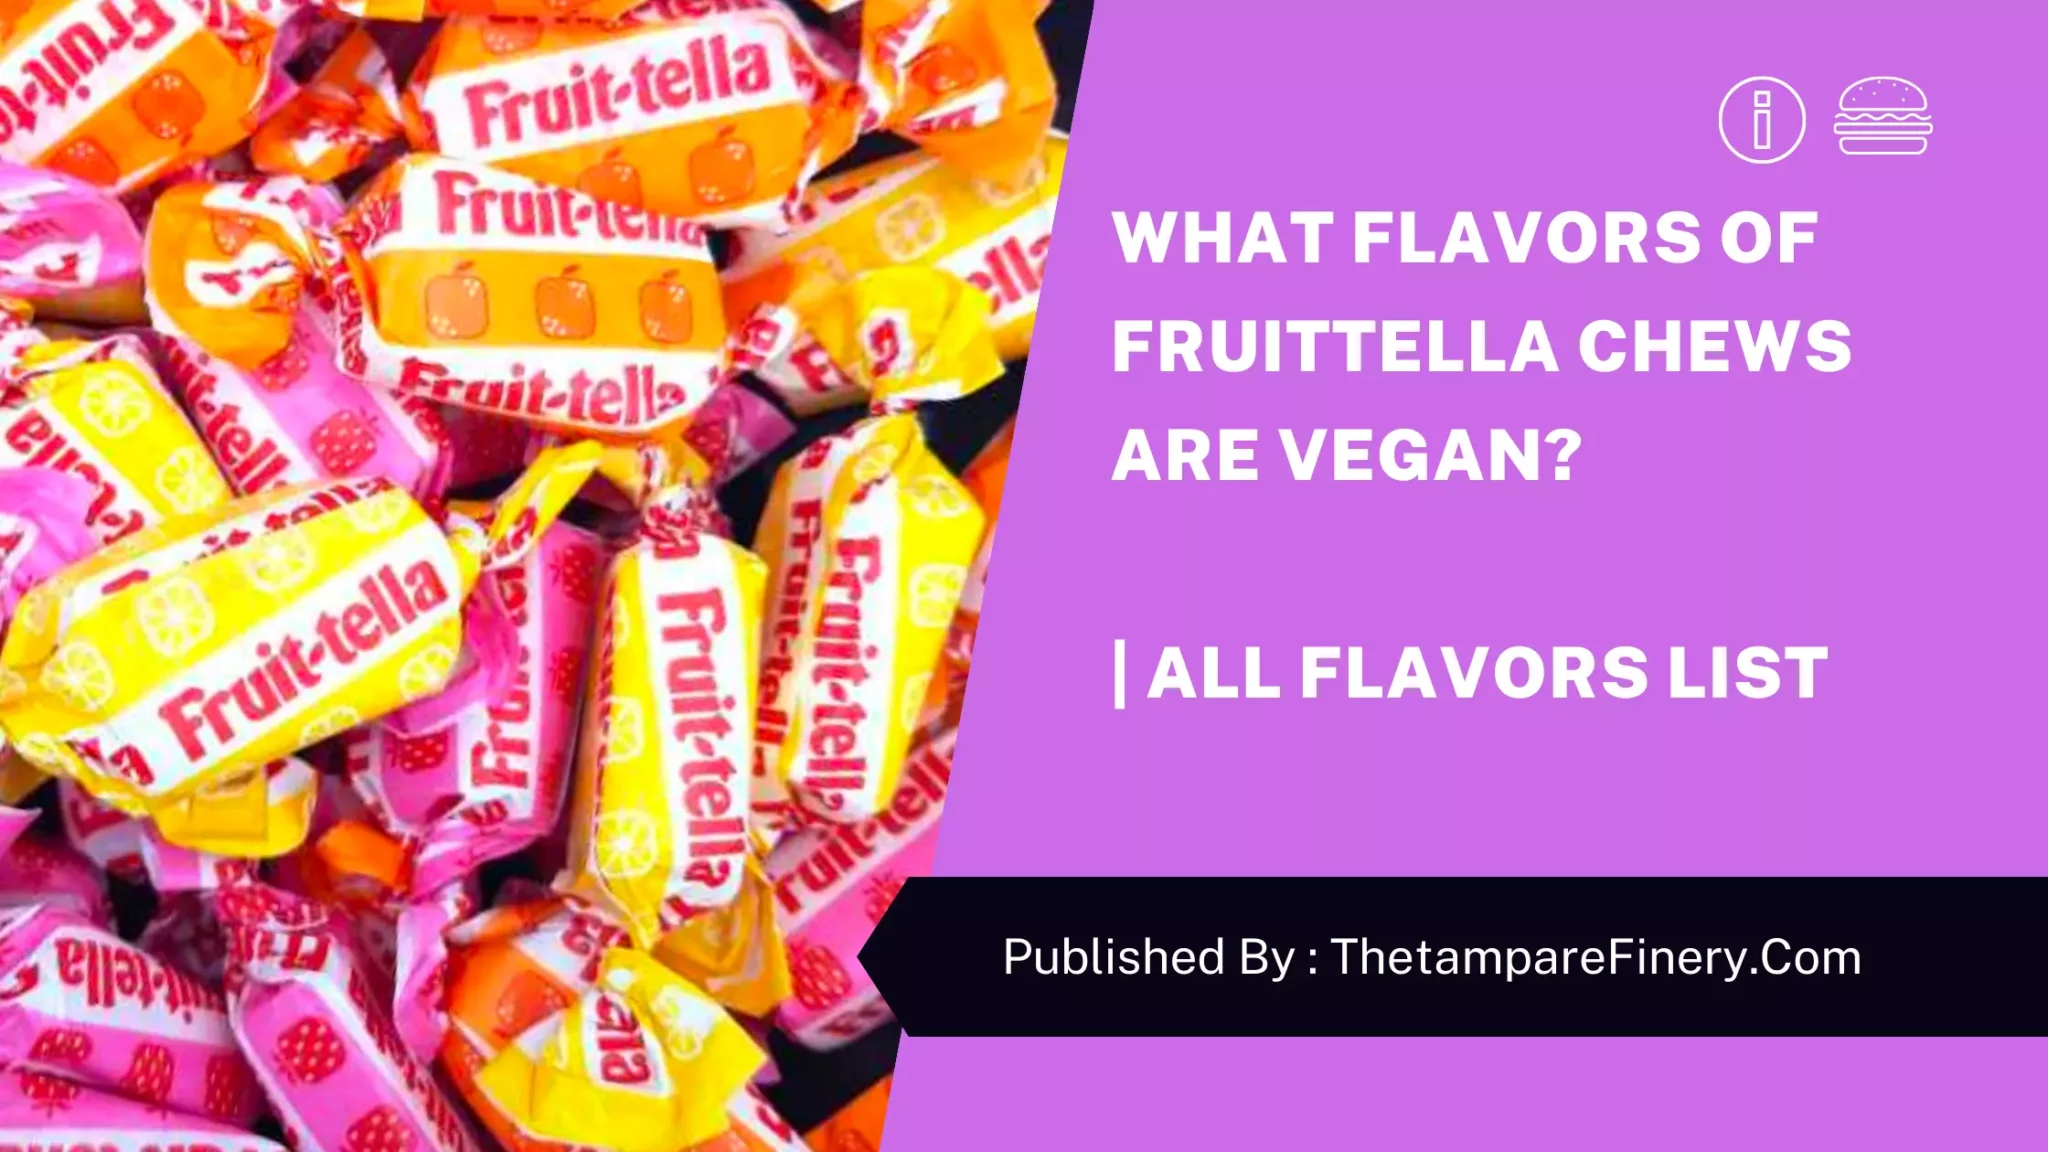 What Flavors of Fruittella Chews are Vegan